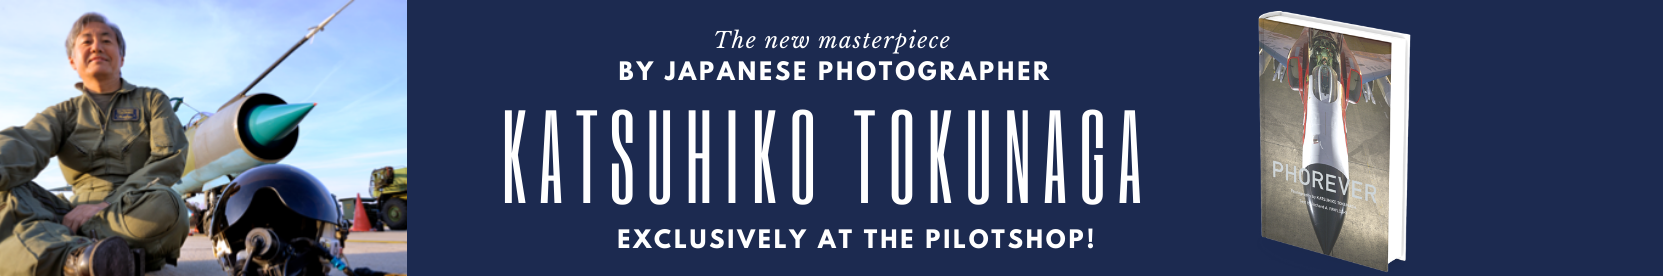 Pilotshop exclusive katsuhiko tokunaga photo book